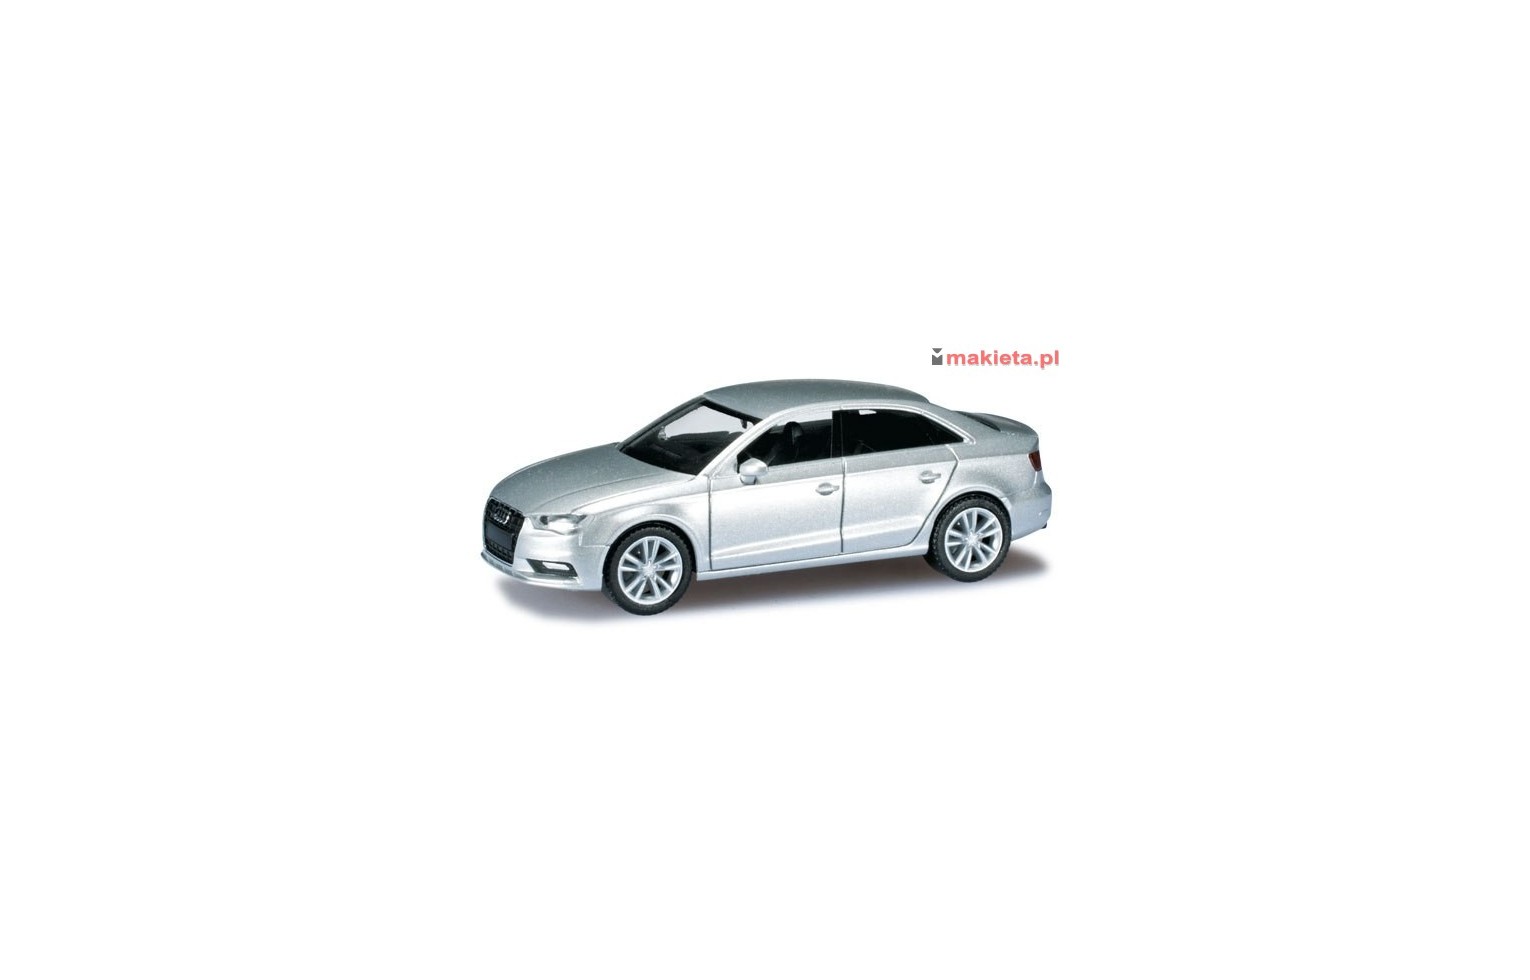 Herpa 038294, Audi A3® Limousine, ice silver metallic, H0